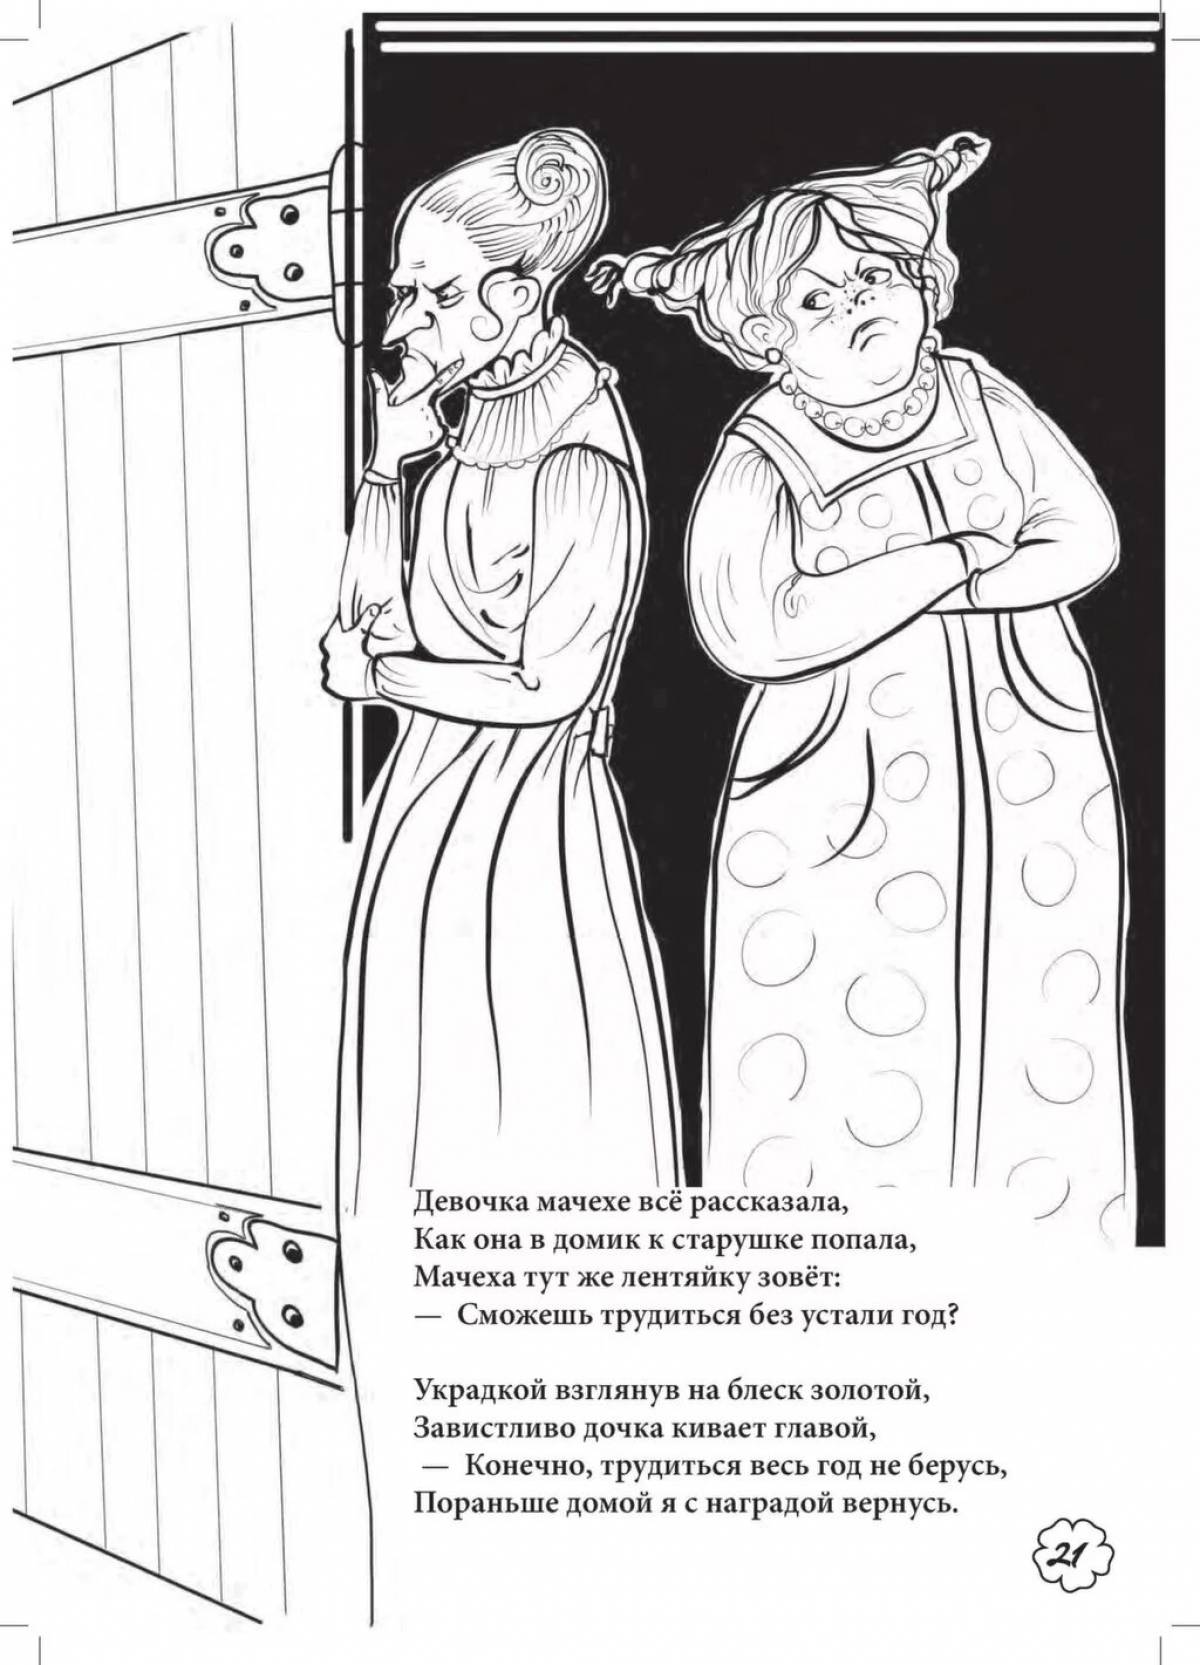 Иллюстрация госпожа Метелица в стиле книжная графика | Illustrators.ru